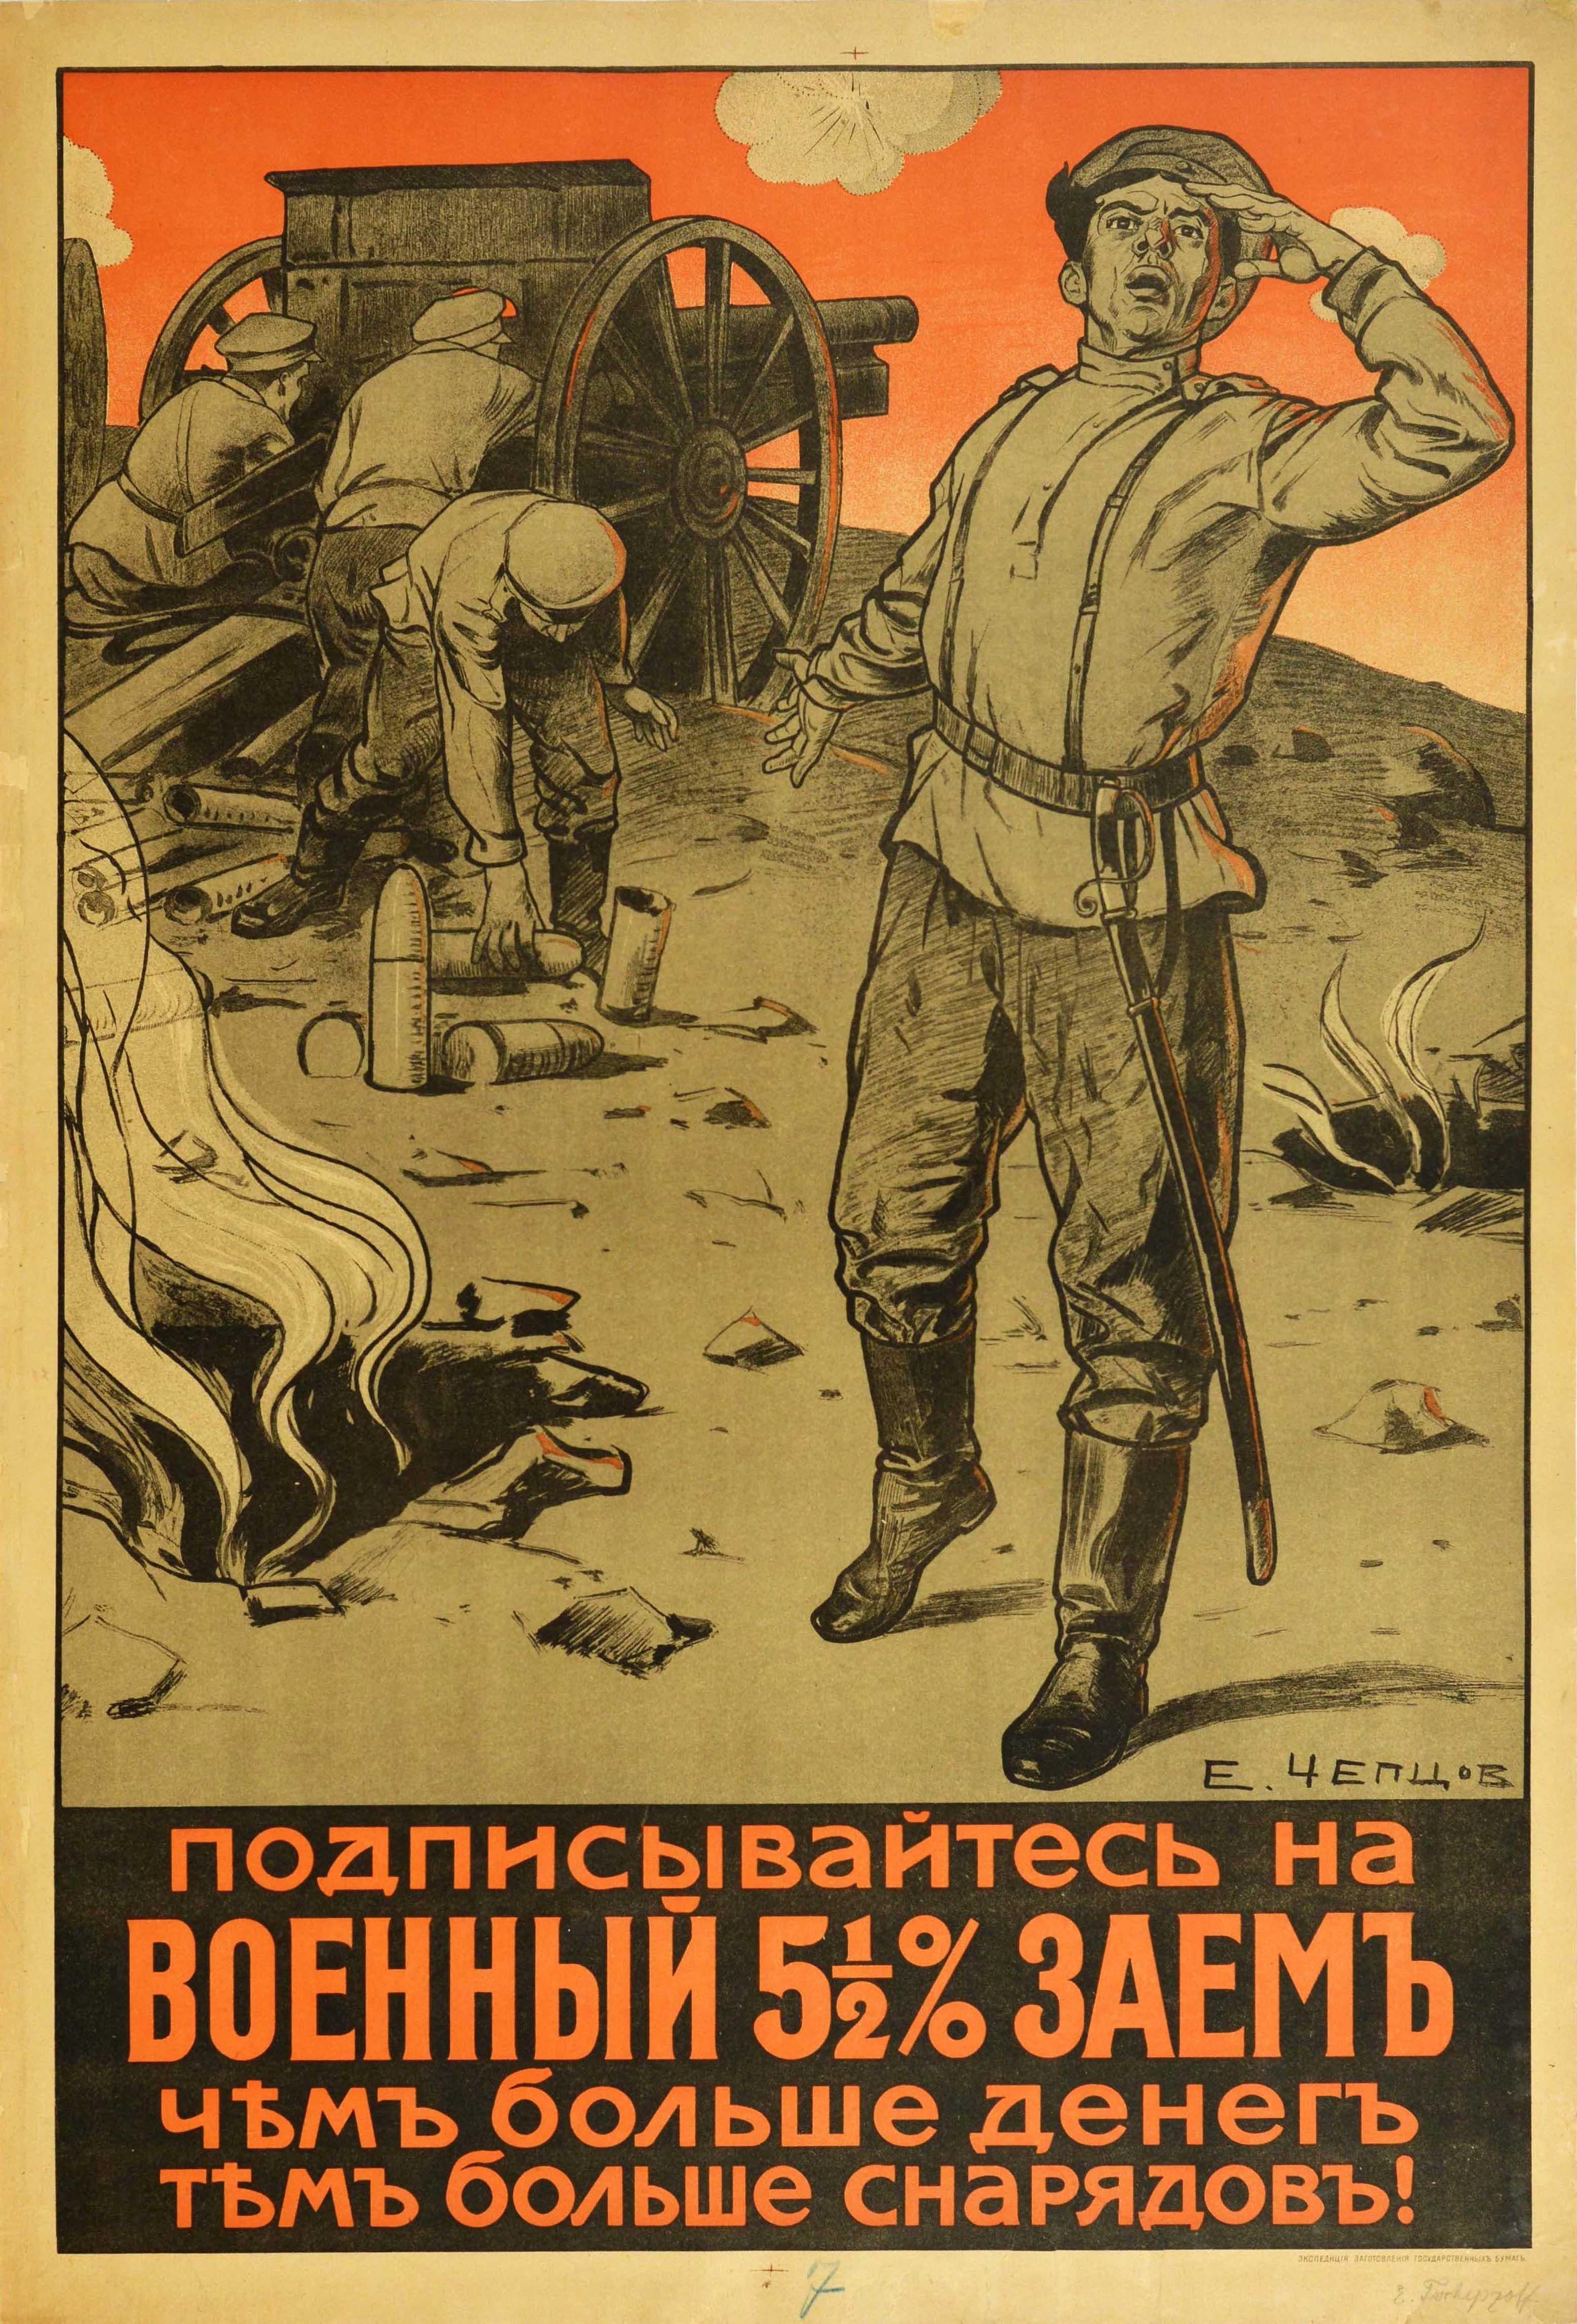 Cheptsov Print - Original Antique Russian WWI Poster Buy Military Loan More Money More Shells